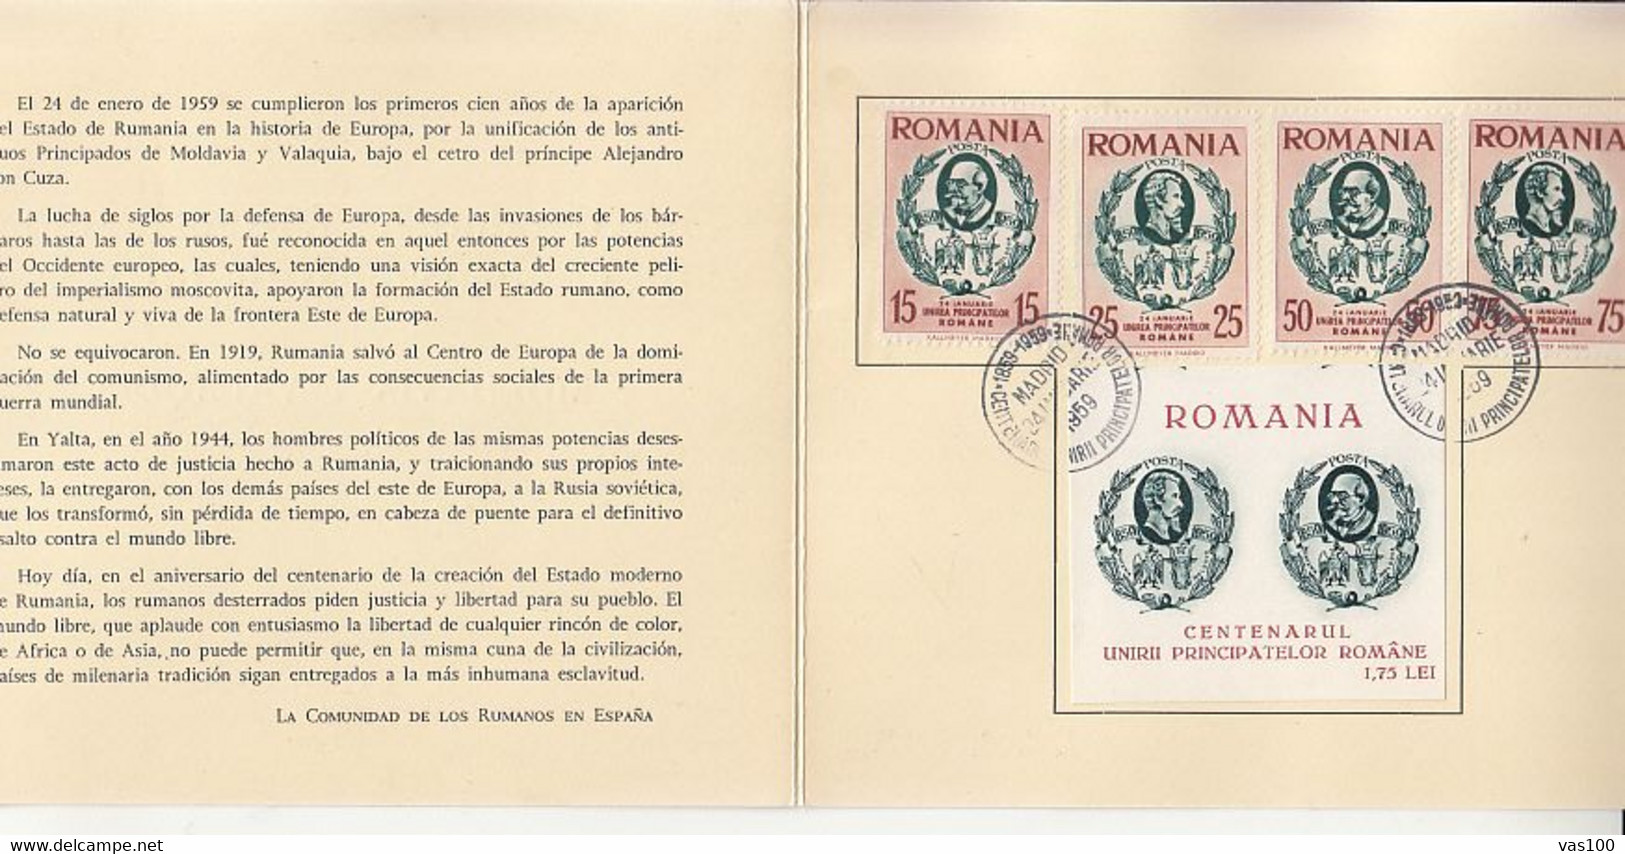 MOLDAVIA AND WALLACHIA UNION, PRINCE AL.I. CUZA, ROMANIAN IN MADRID EXILE ISSUE, BOOKLET, 4X, 1959, ROMANIA